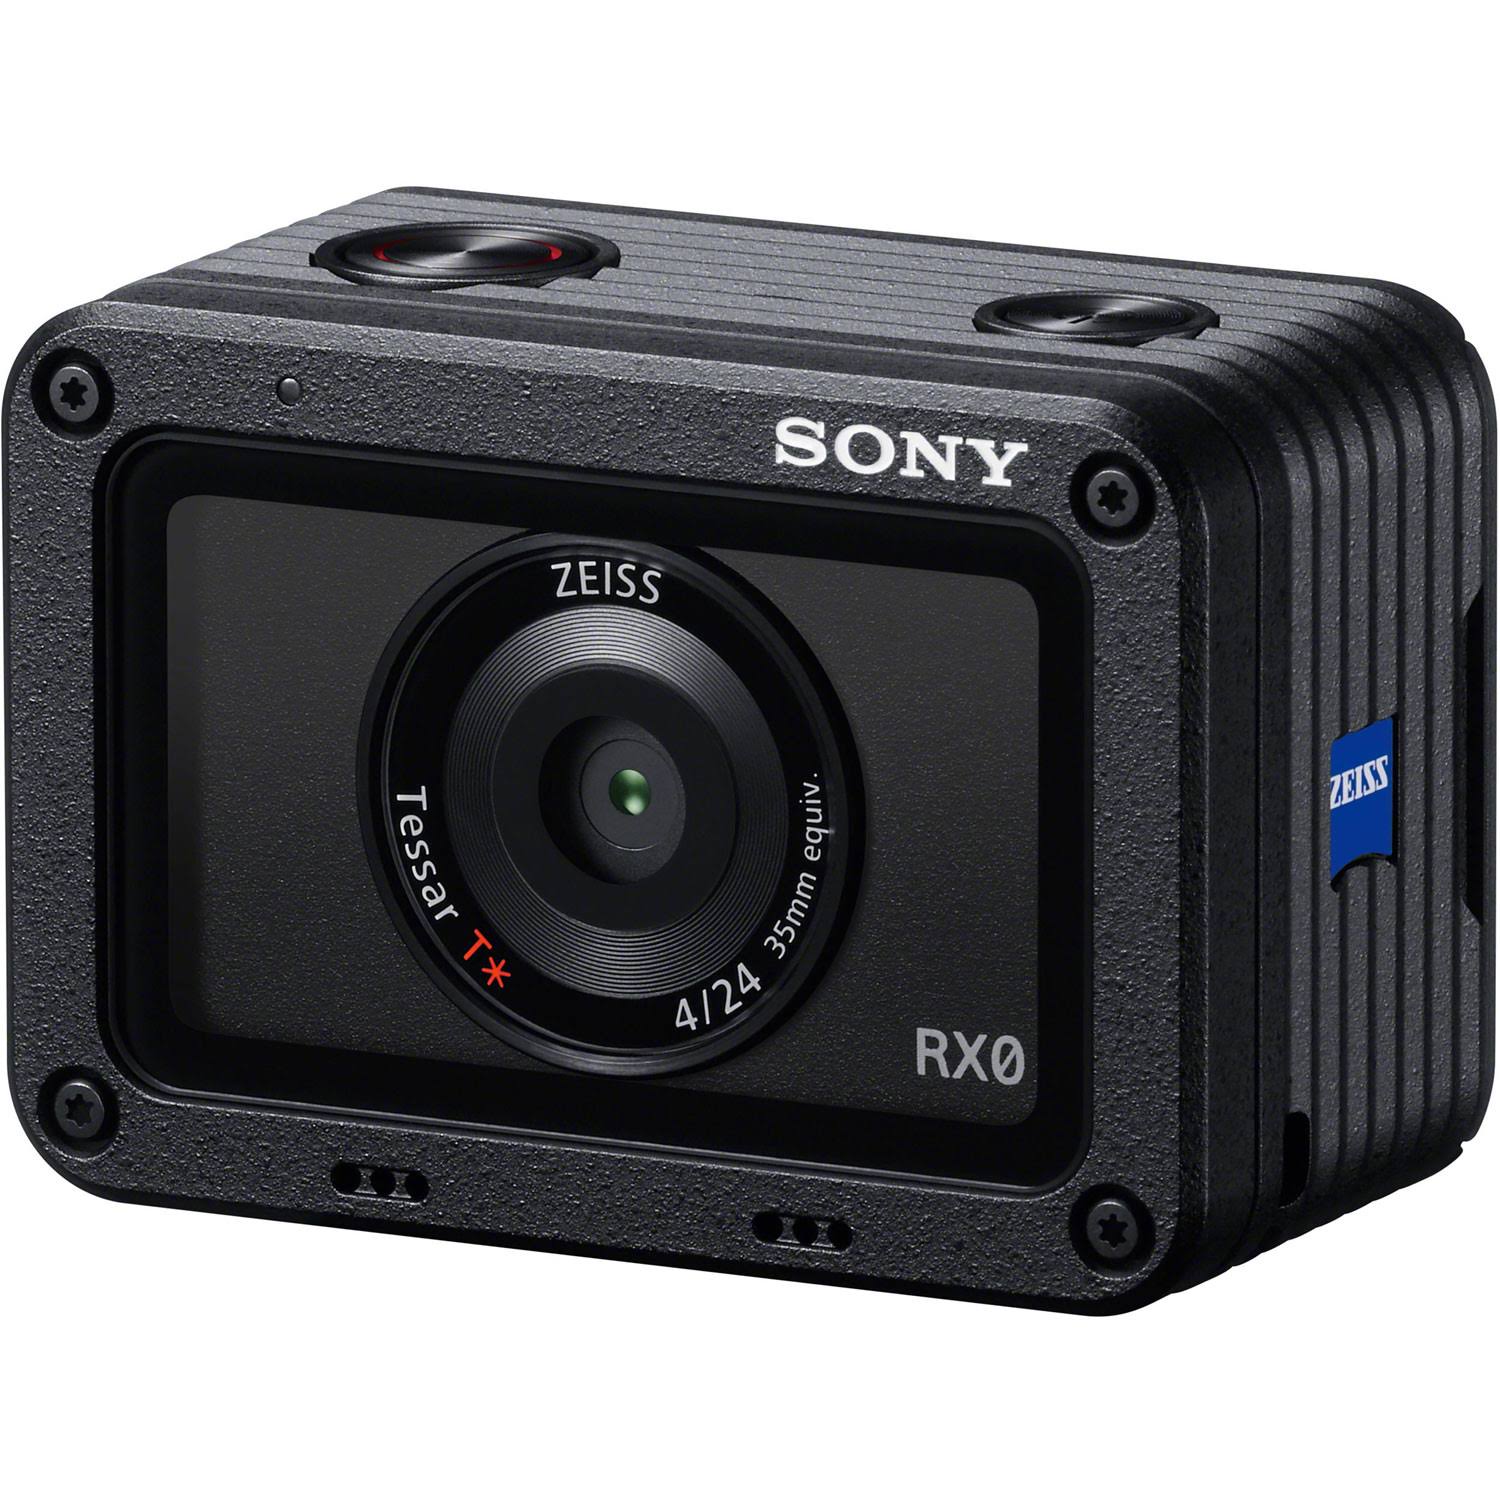 Sony كاميرا مدمجة للغاية بمستشعر من النوع 1.0 بتصميم مق...